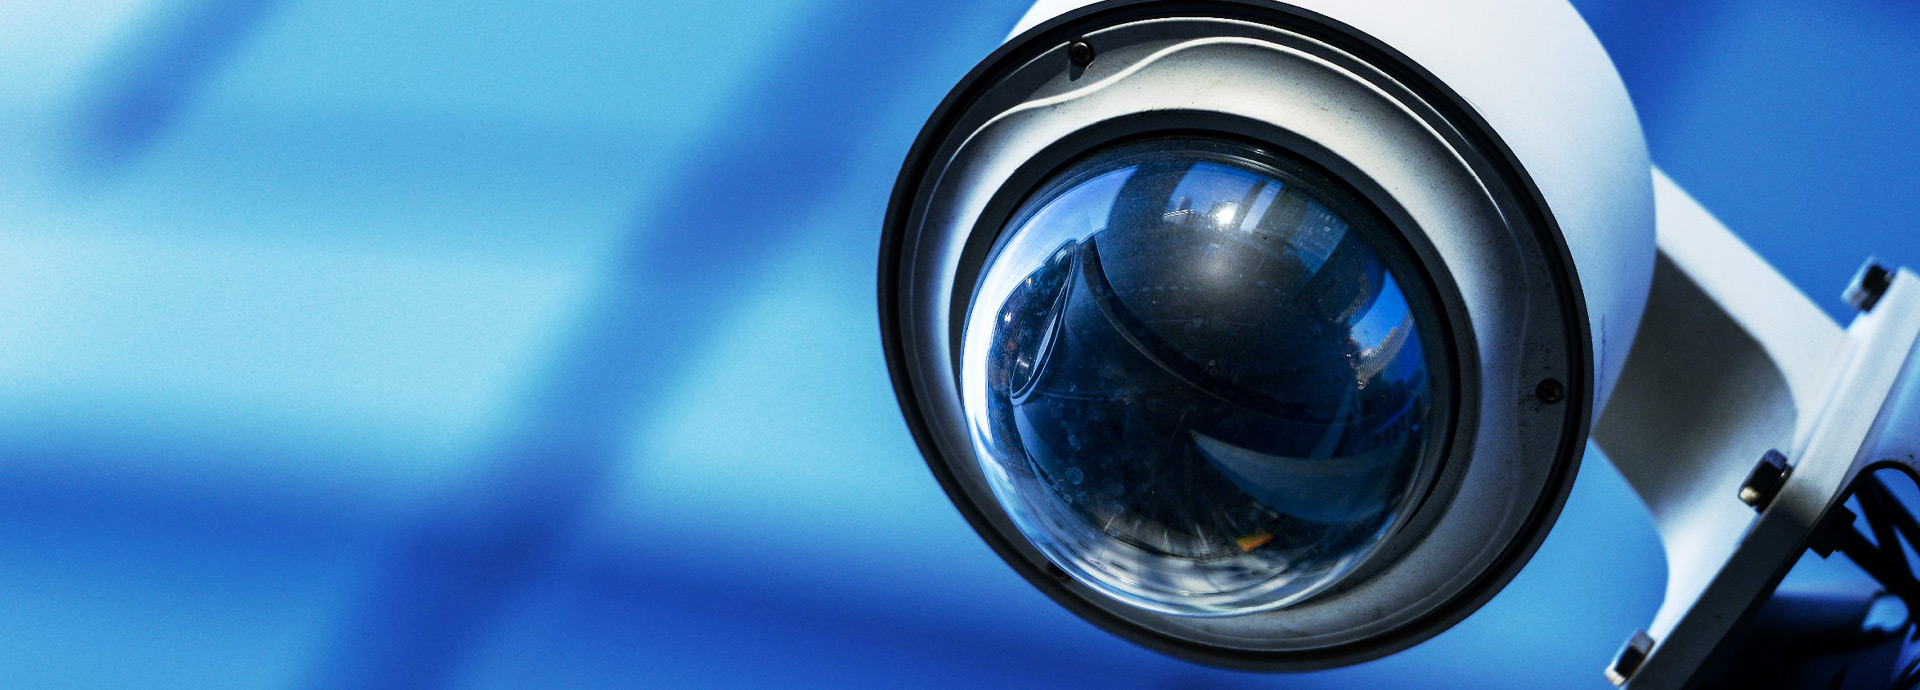 commercial video camera surveillance